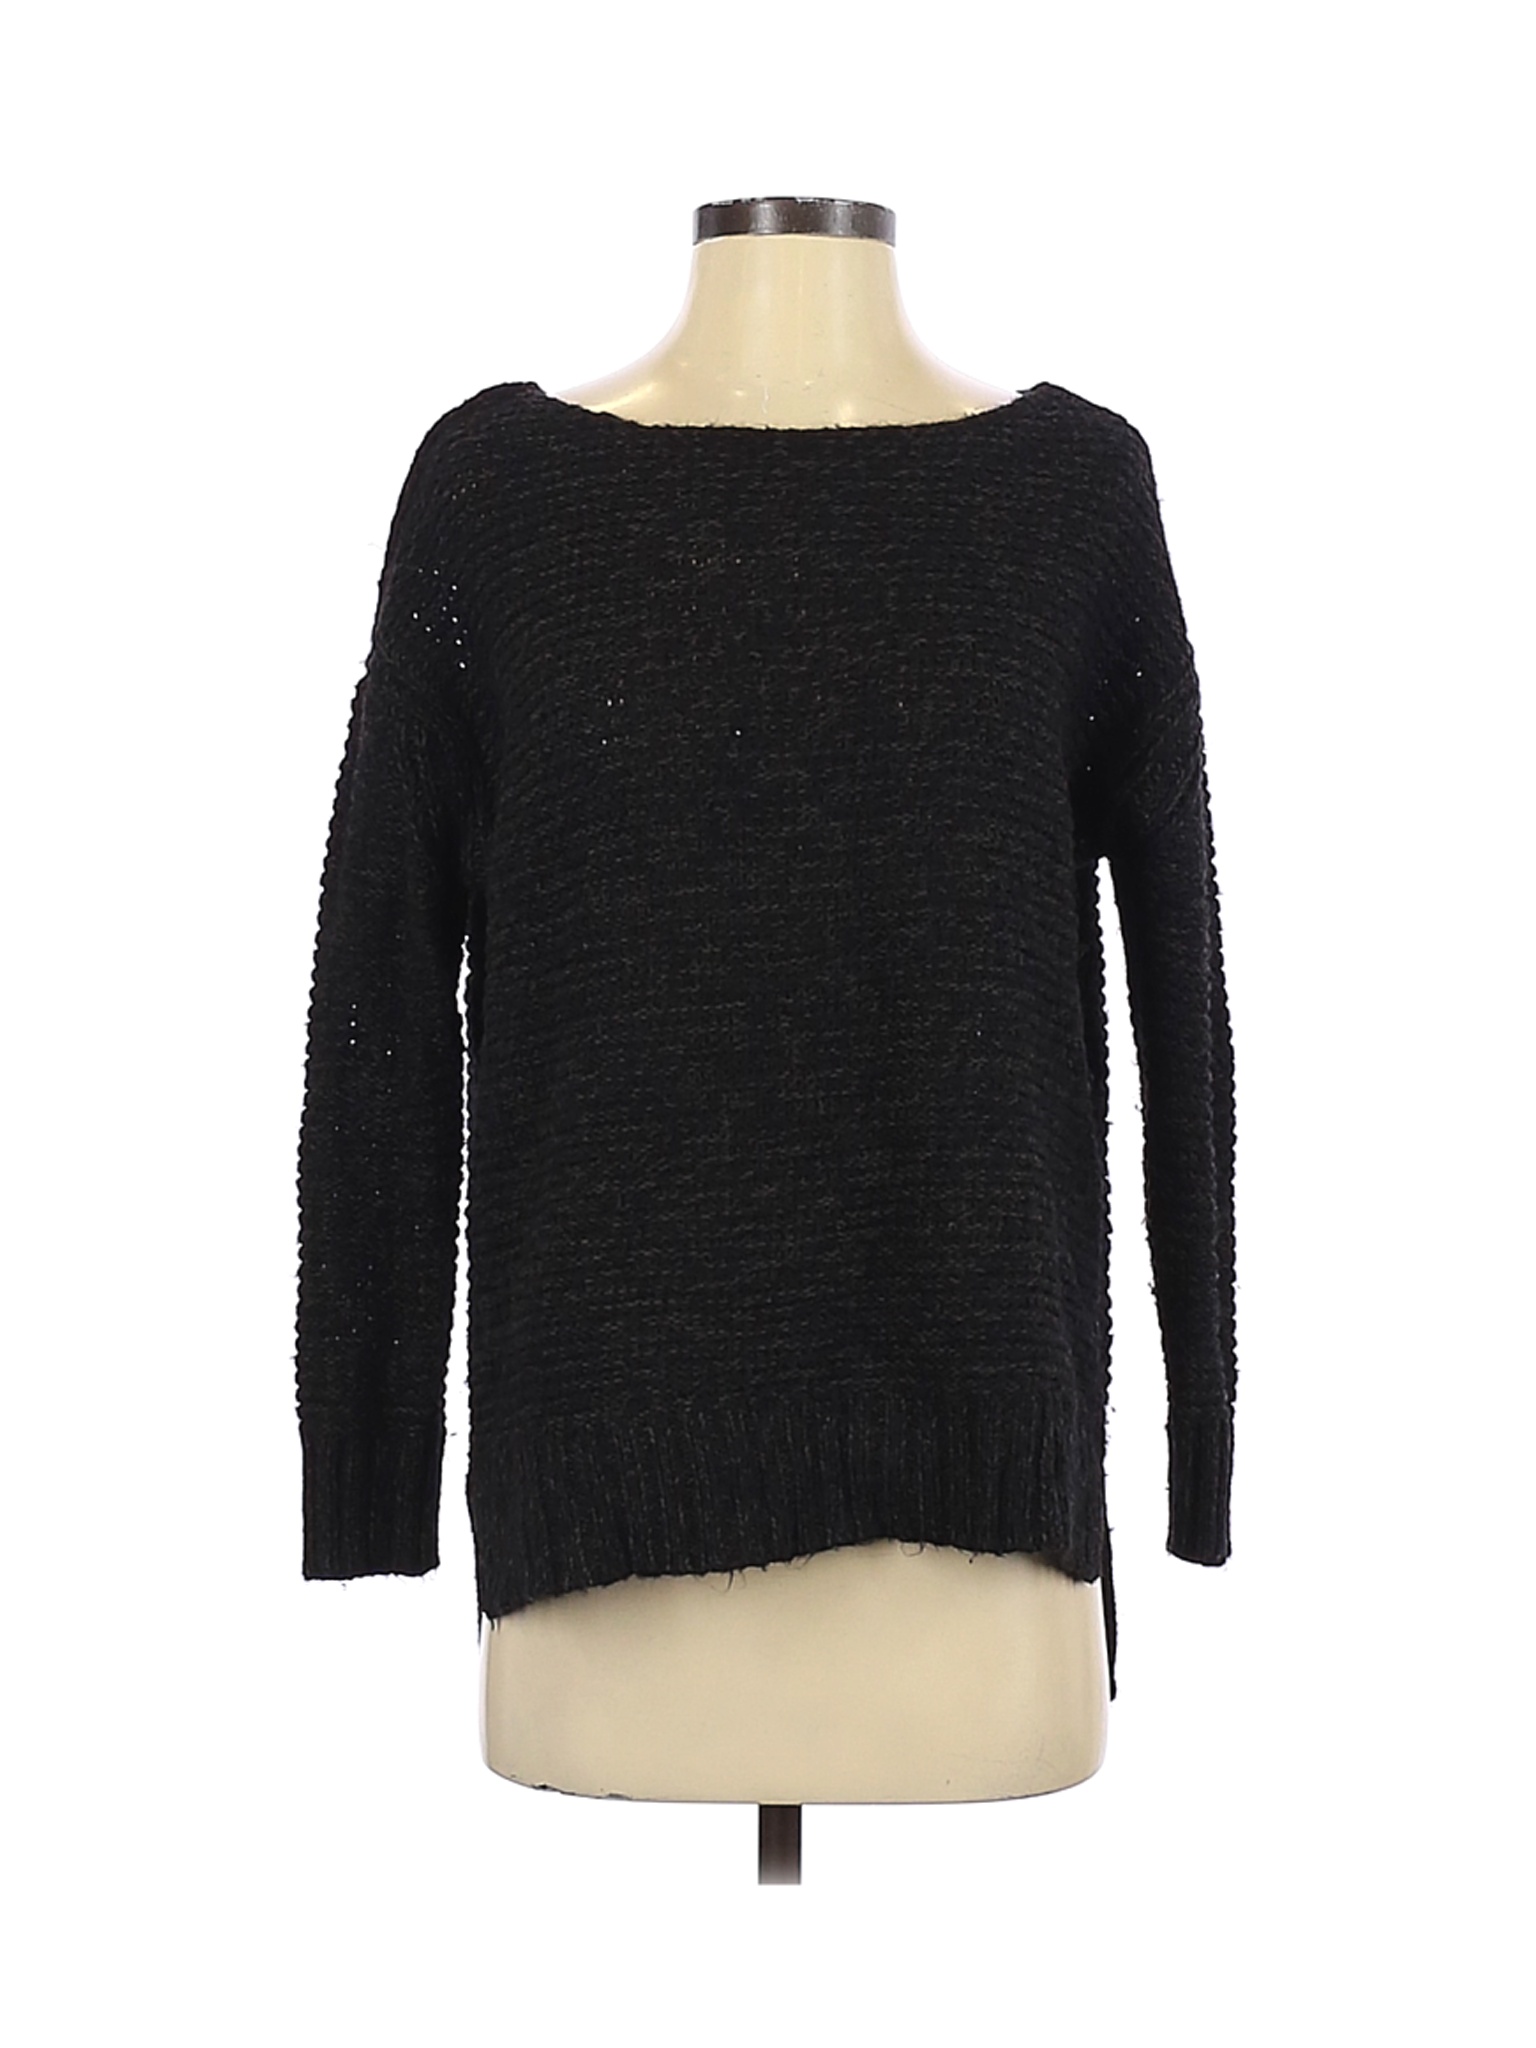 RD Style Women Black Pullover Sweater S | eBay